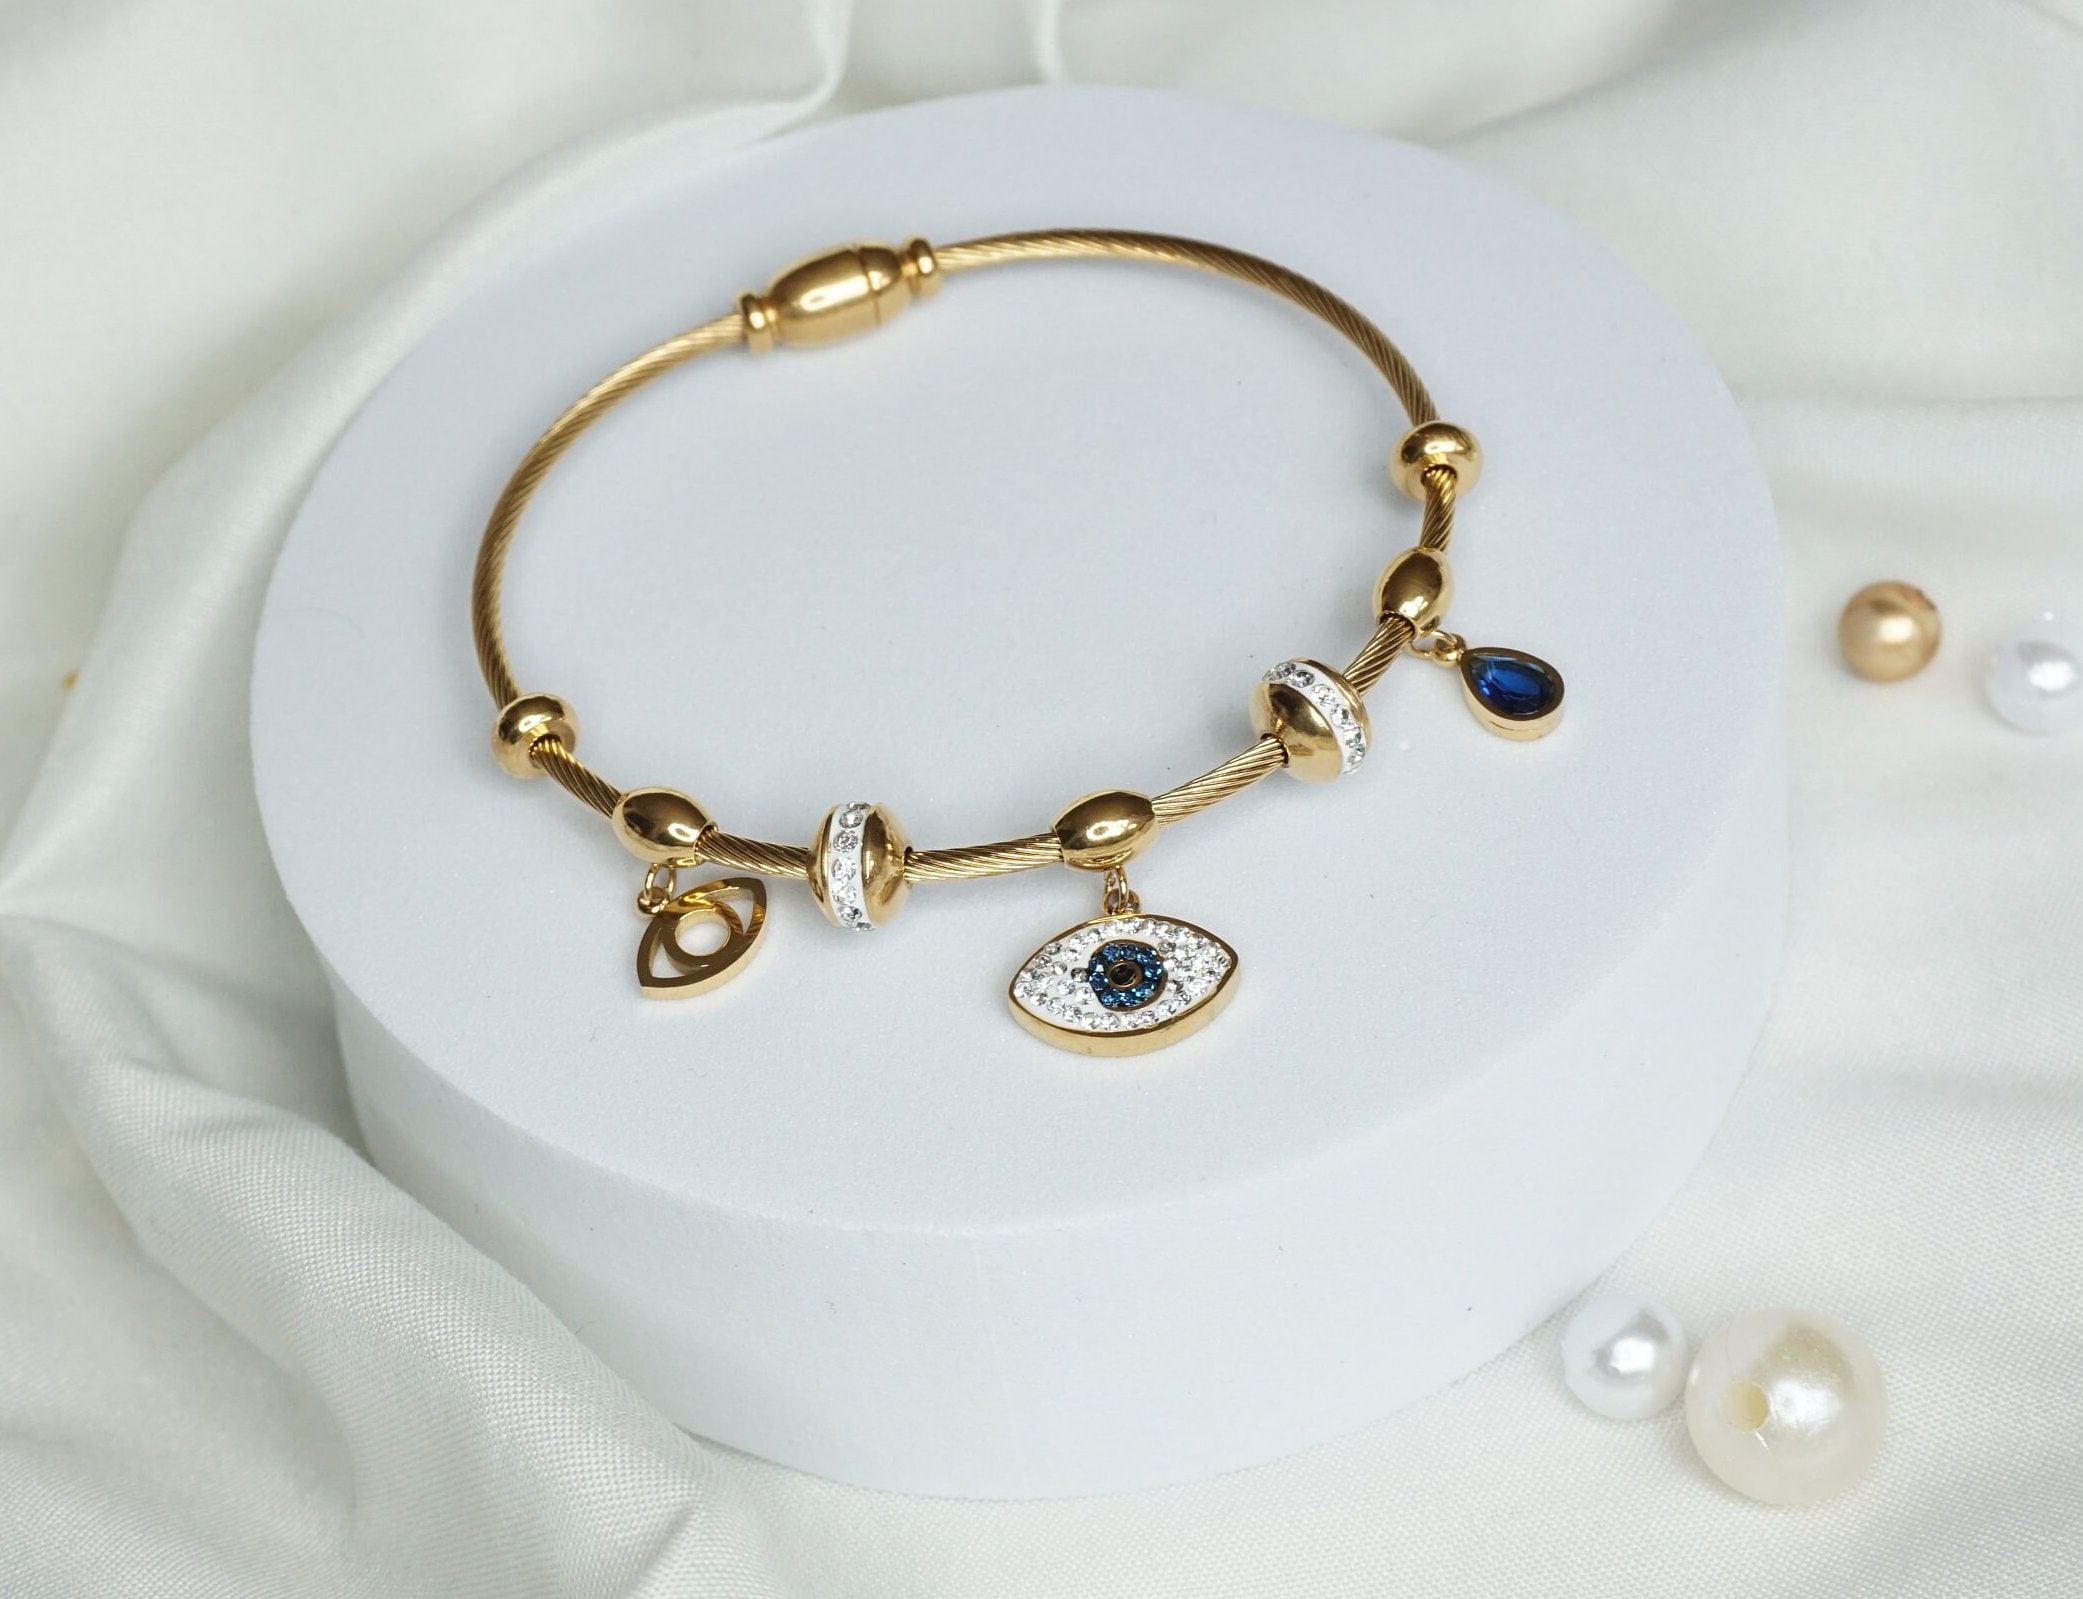 Louis Vuitton Empreinte Bangle Bracelet 18K White Gold and Pave